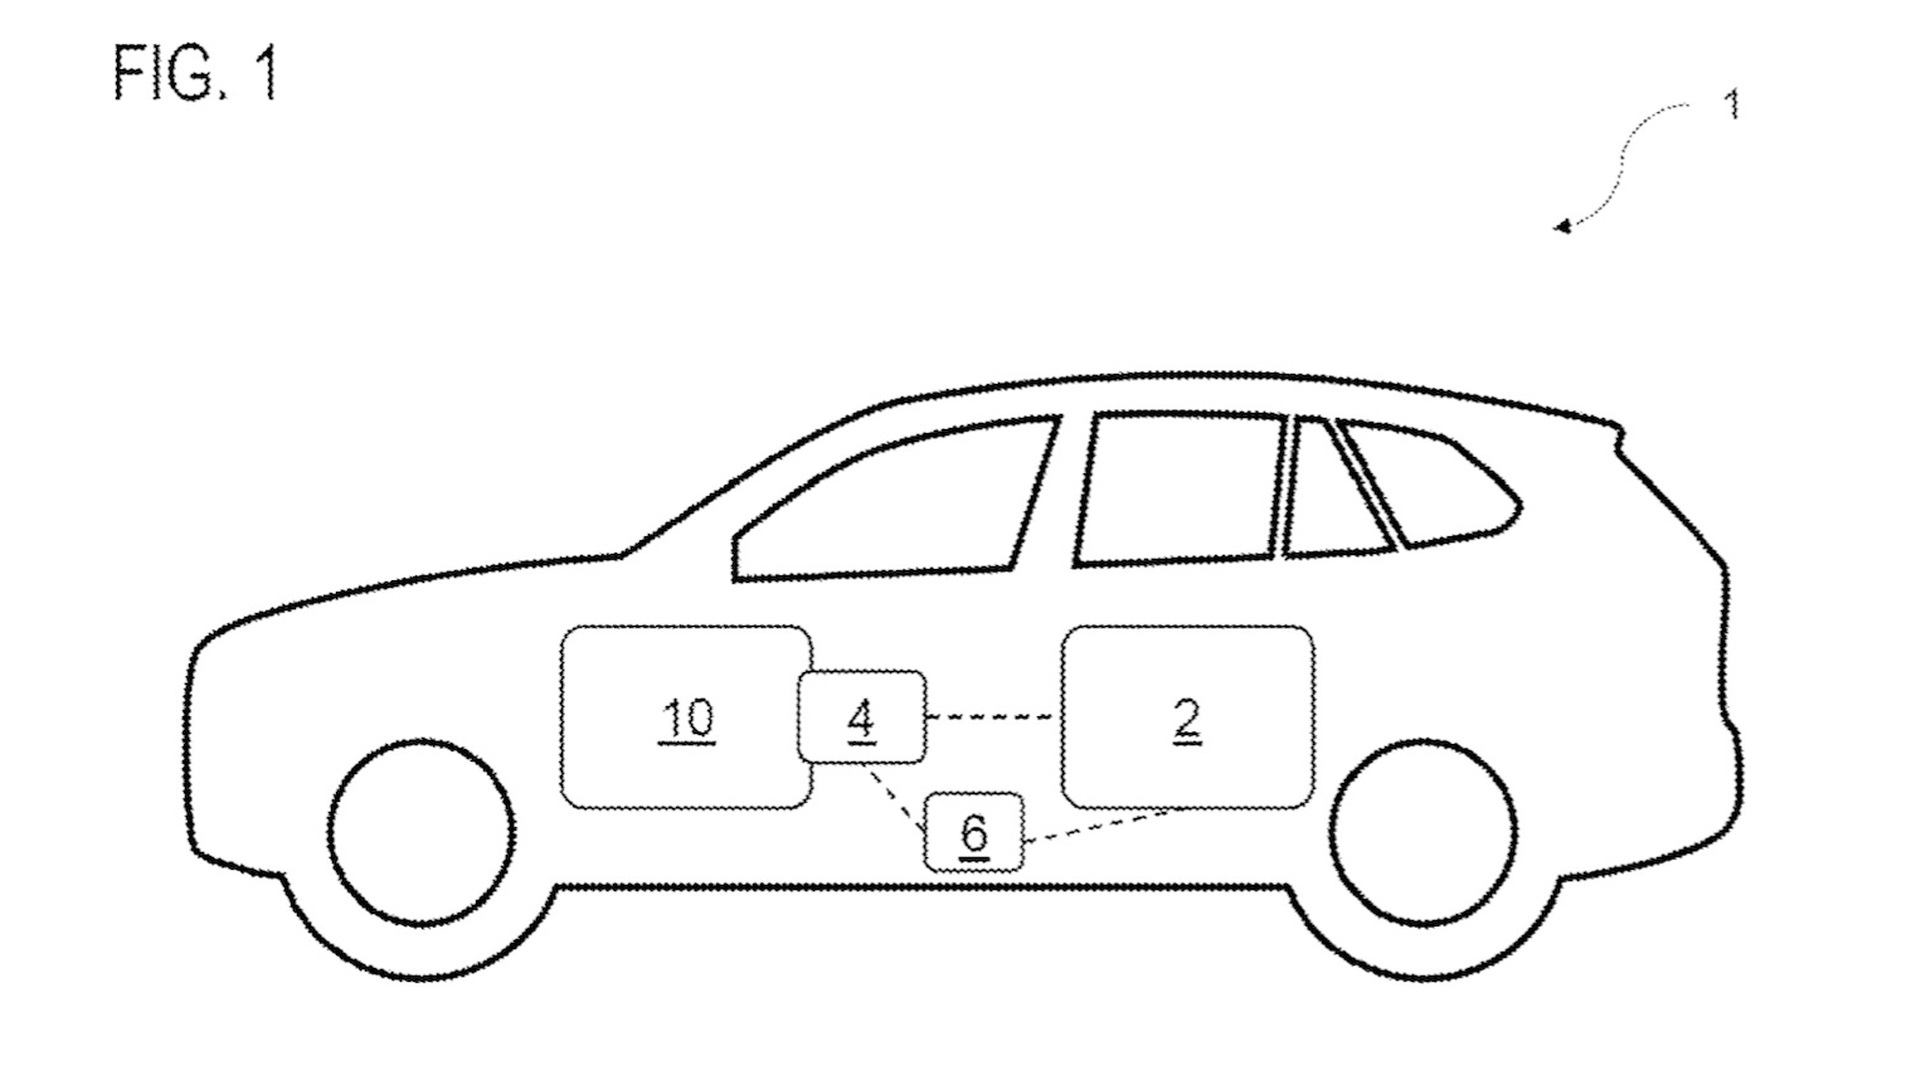 BMW tailored EV drive mode patent image